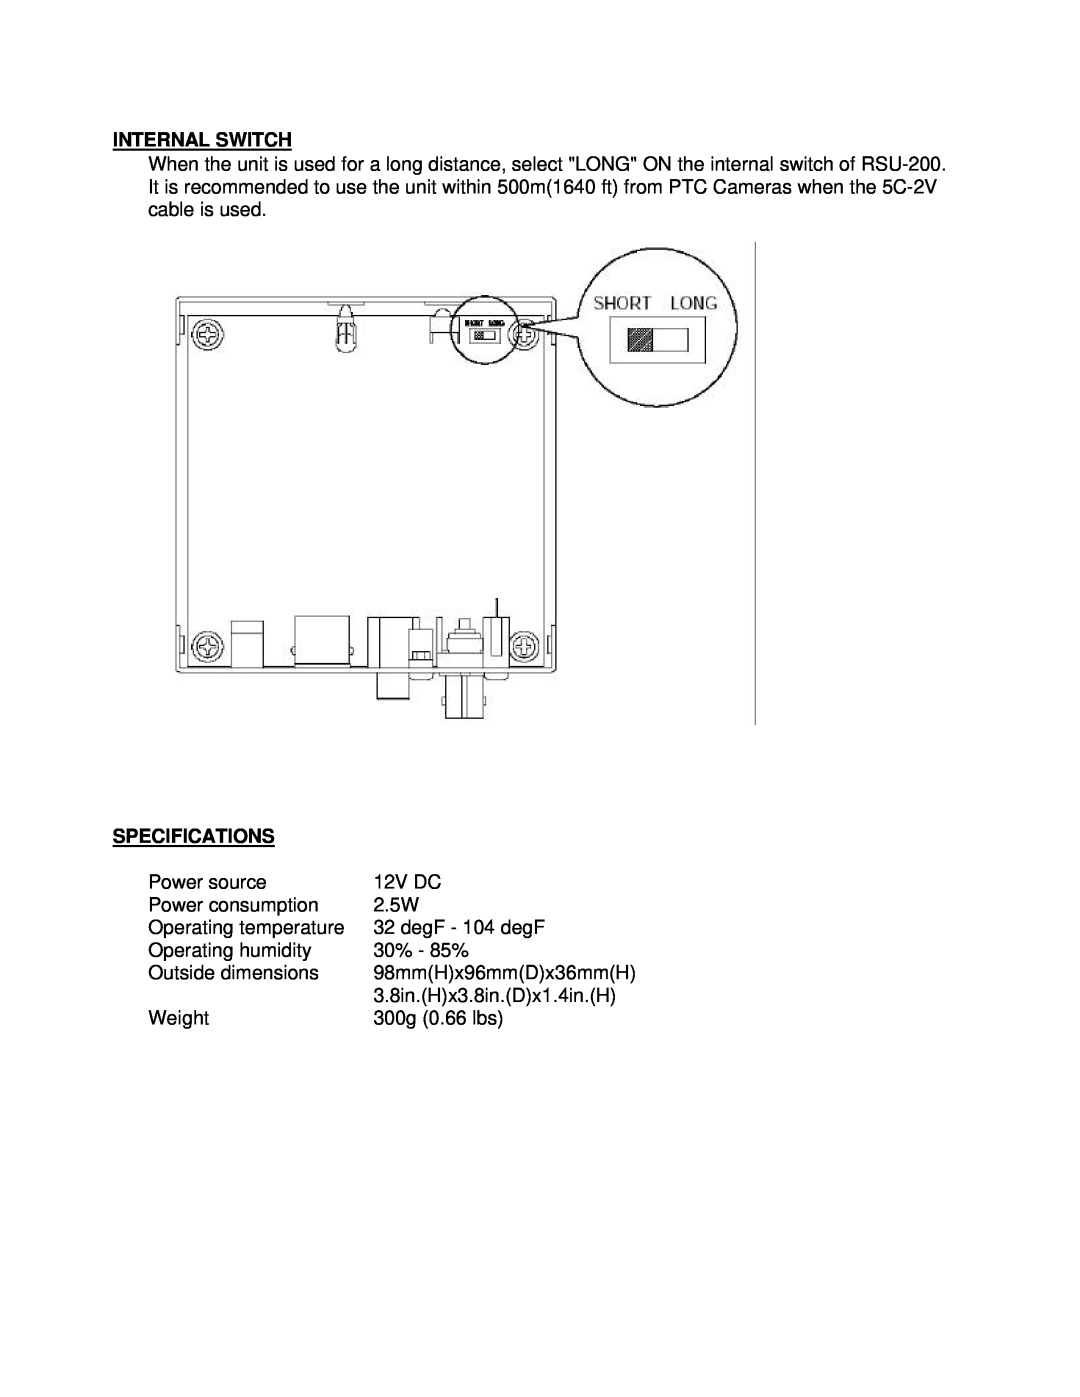 Elmo RSU-200 instruction manual Internal Switch, Specifications 